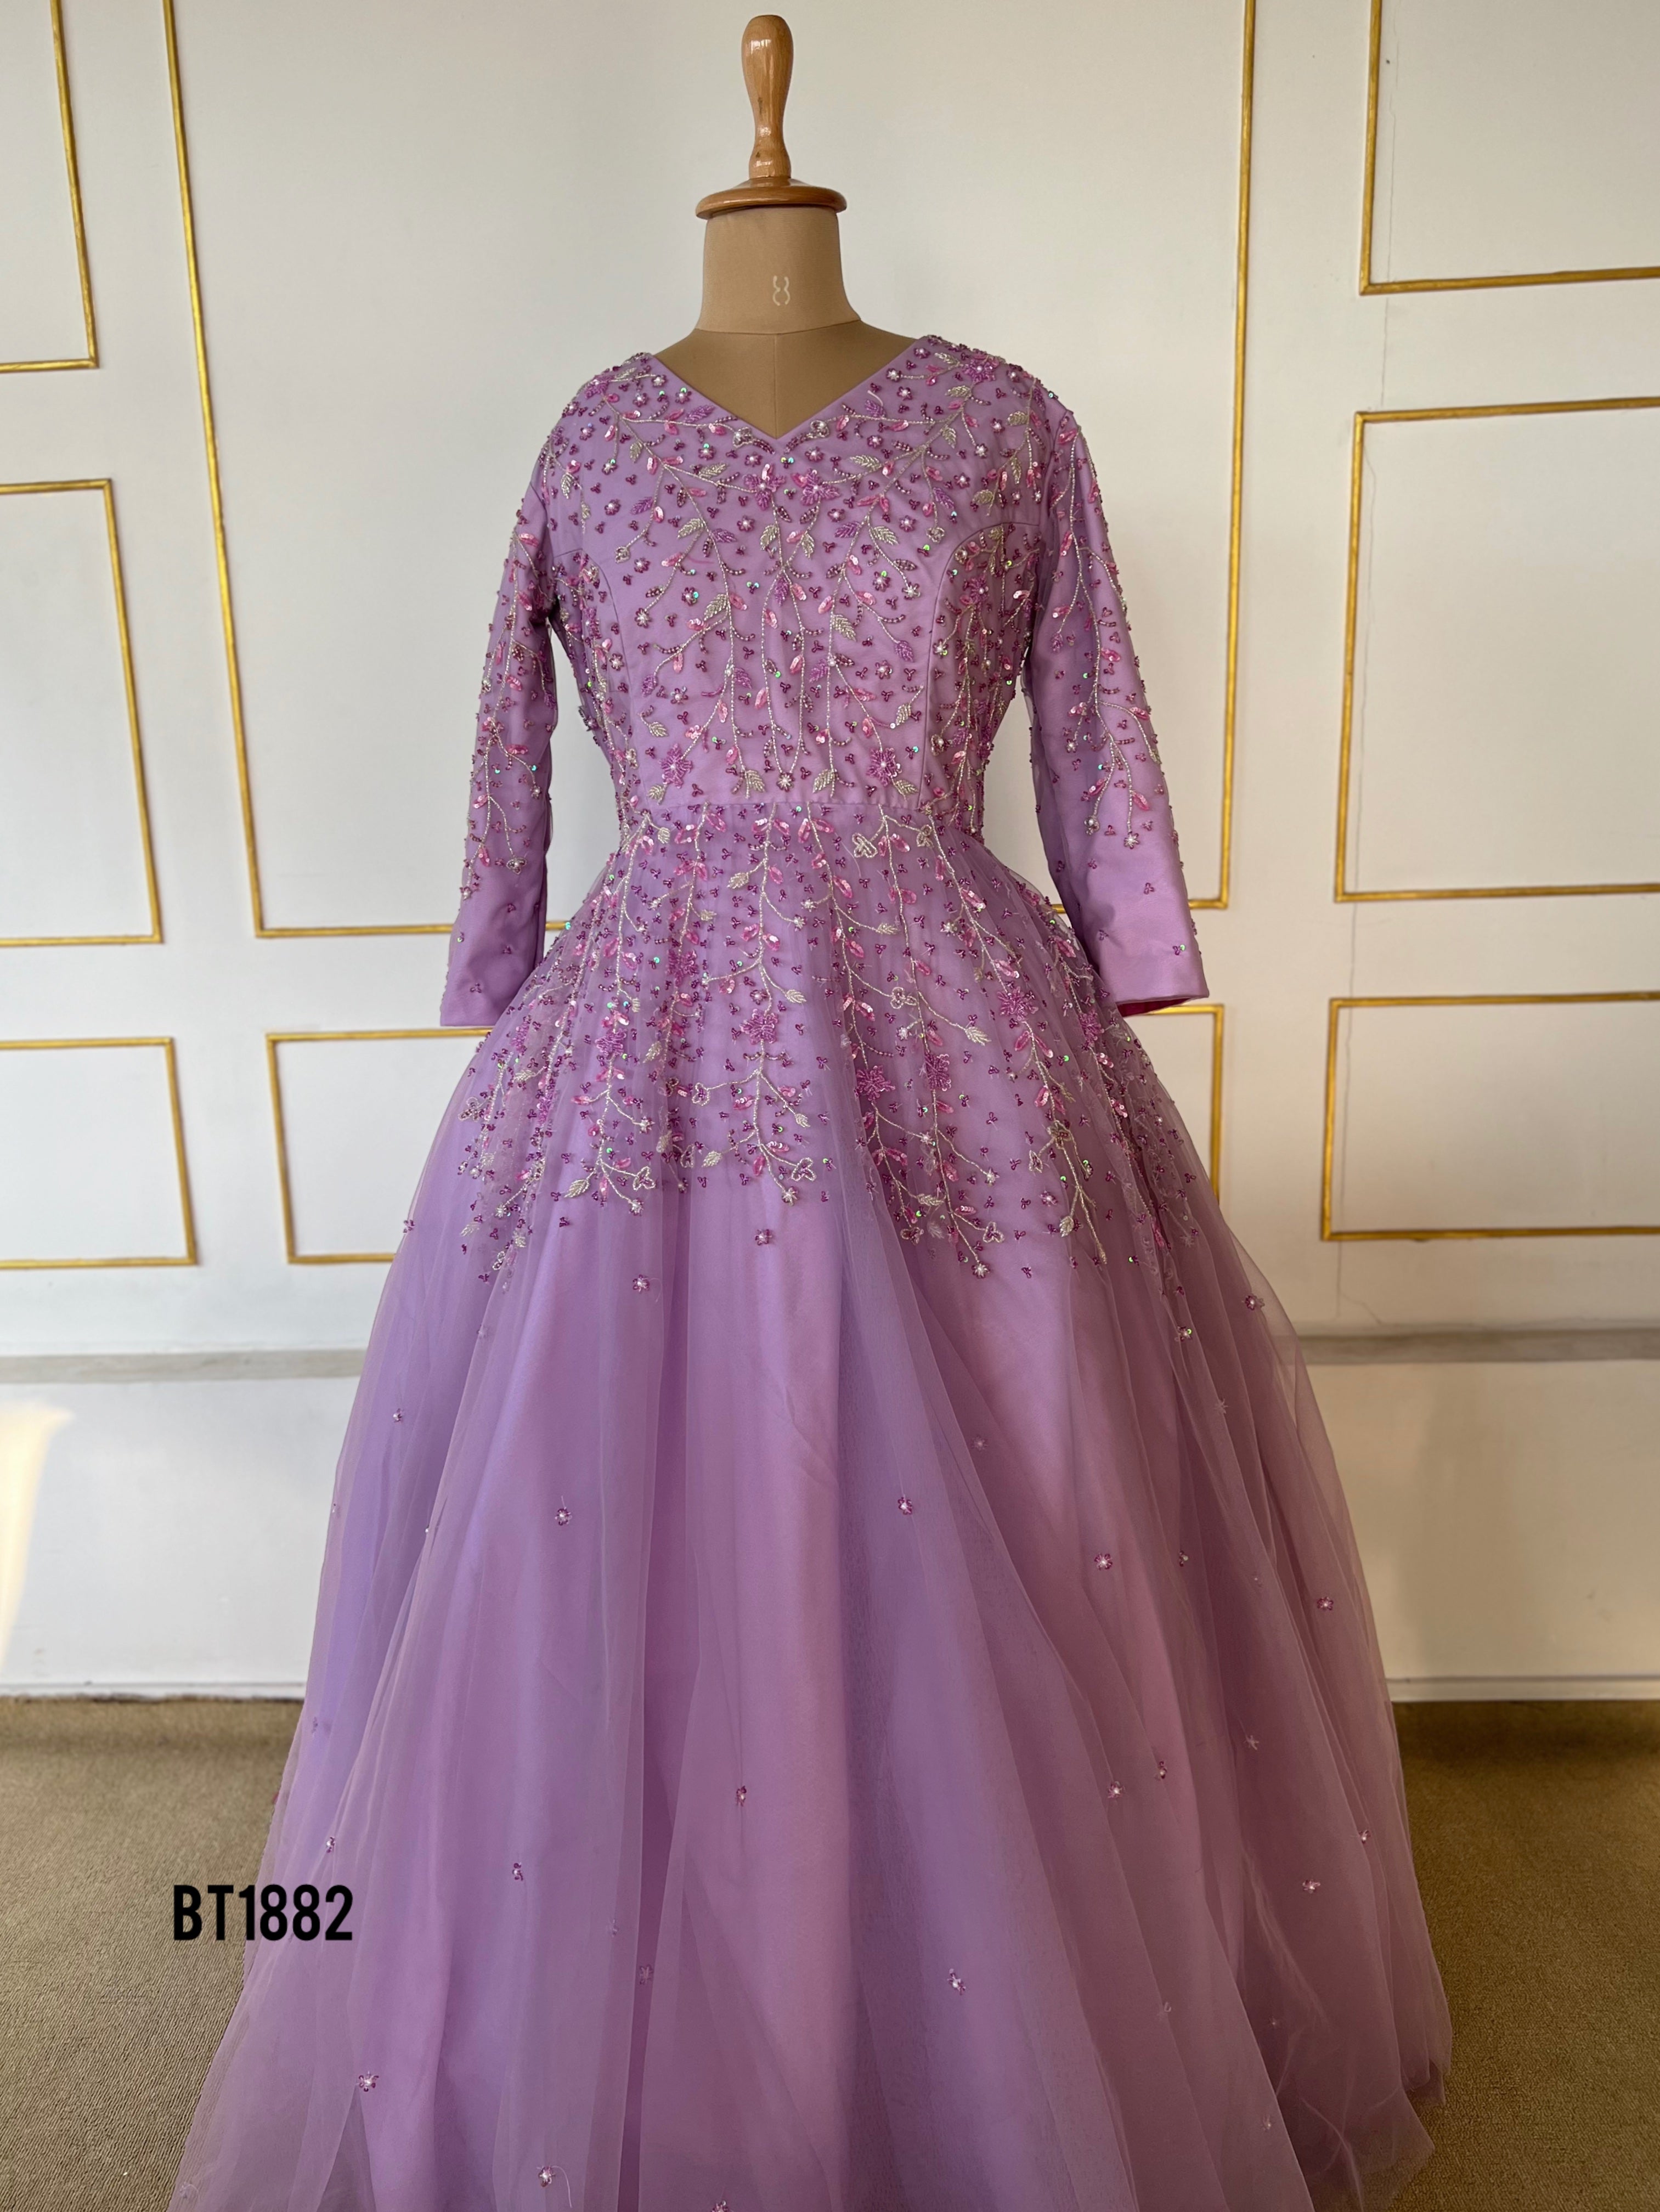 Bt1882 Lavender Dream Gown  Fairytale Elegance Mom